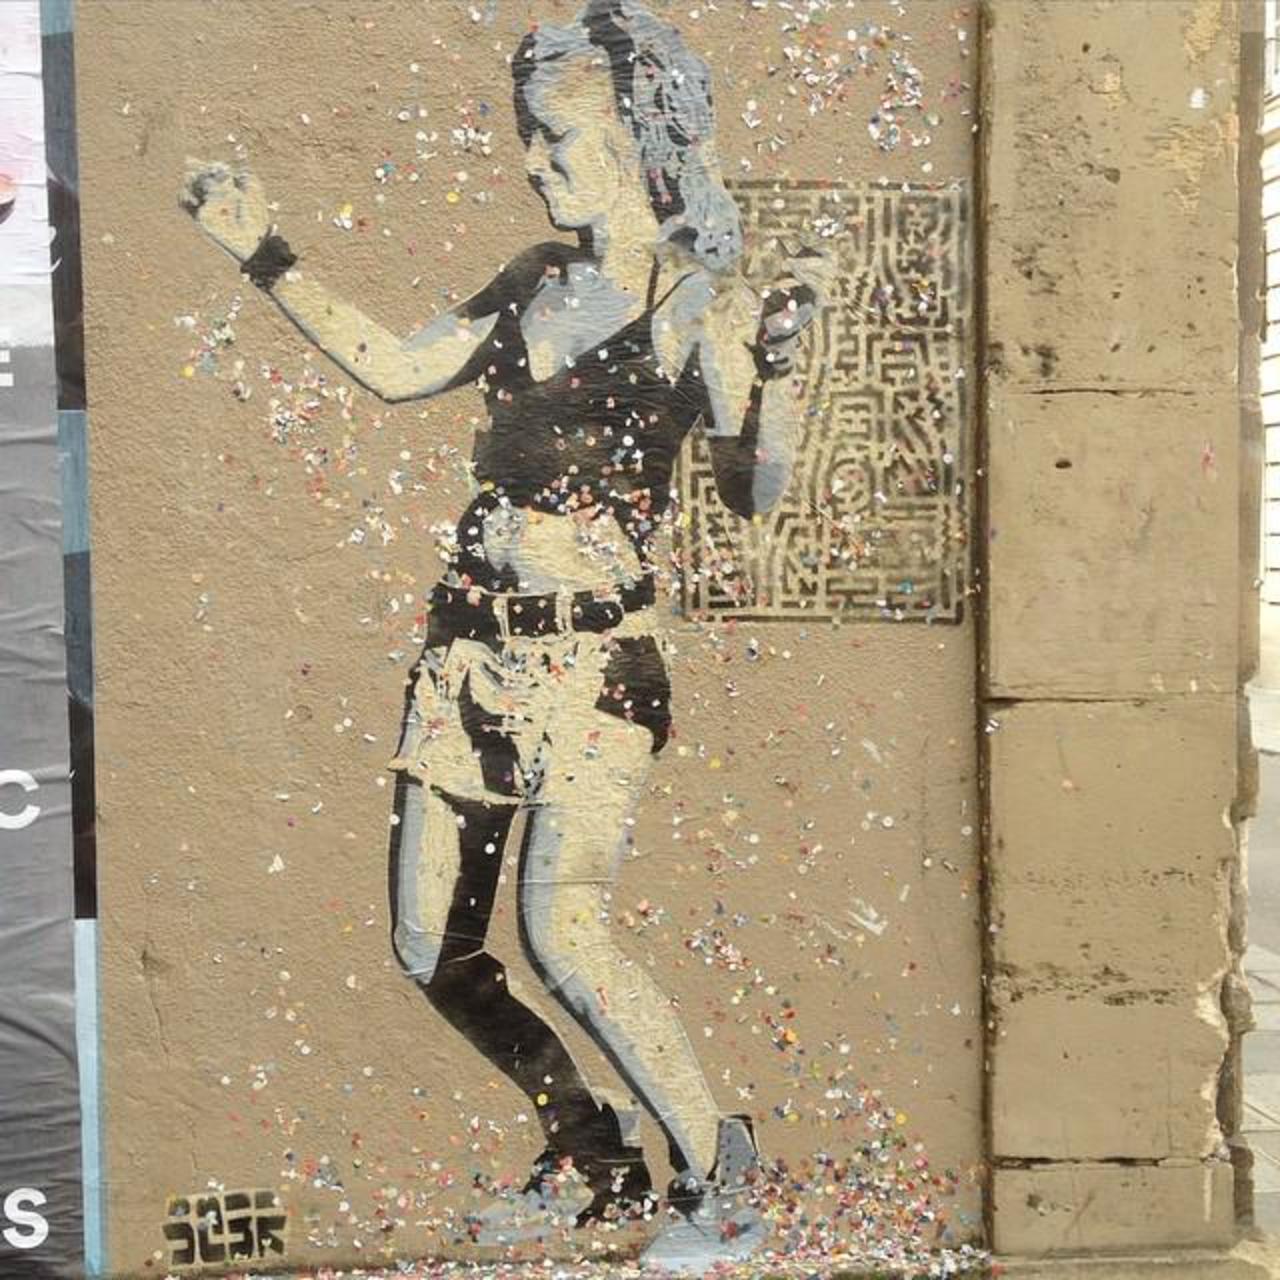 RT @circumjacent_fr: #Paris #graffiti photo by @3eparallele http://ift.tt/1jlJyI2 #StreetArt http://t.co/4HW3FyPPEP